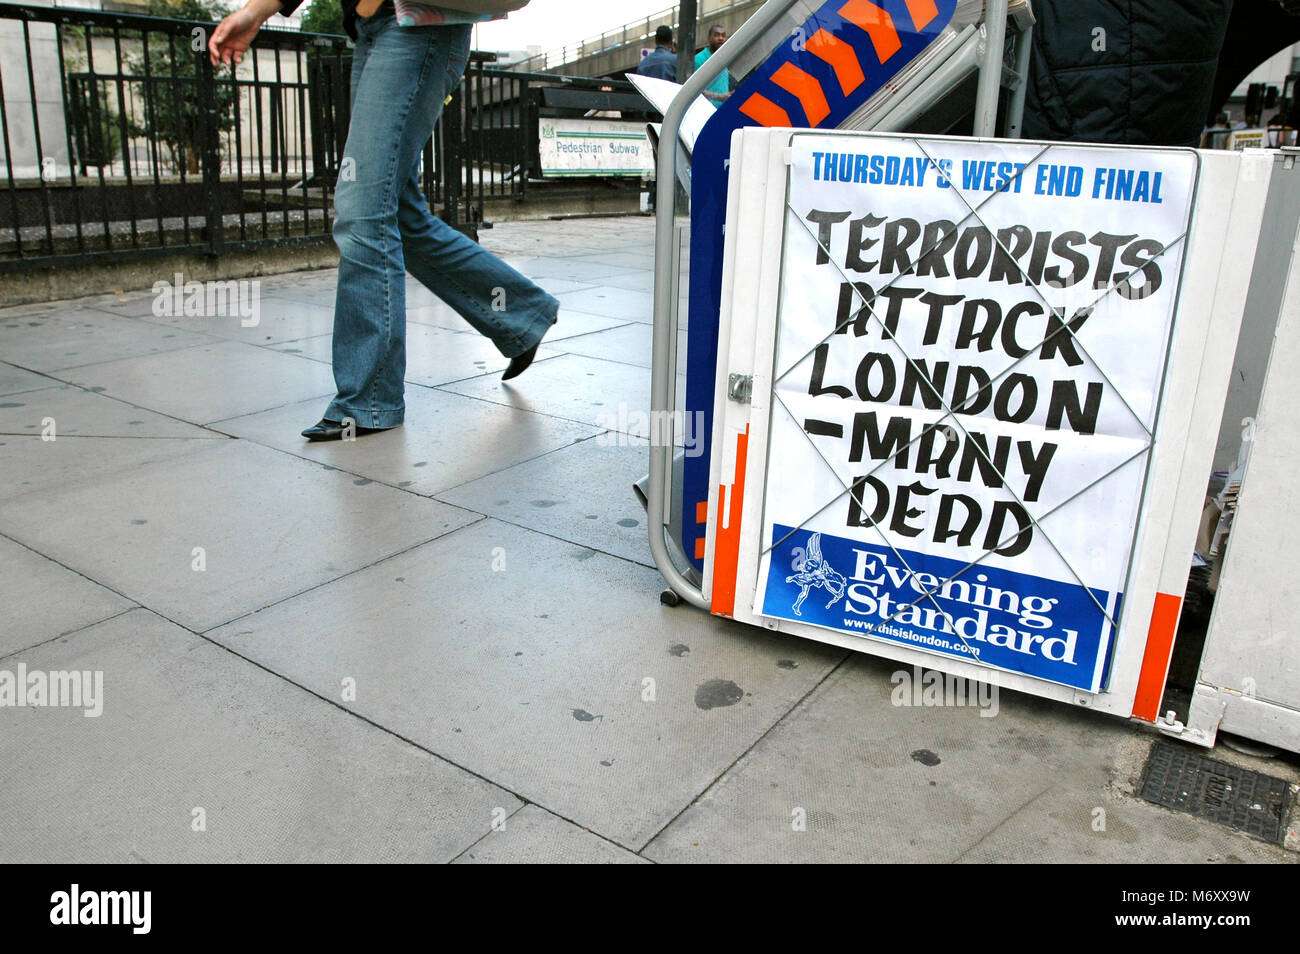 7/7/05. London Terrorist Bomb Attacks . Evening Standard newspaper headline billboard near Edgware Road Station, London, UK. . Stock Photo